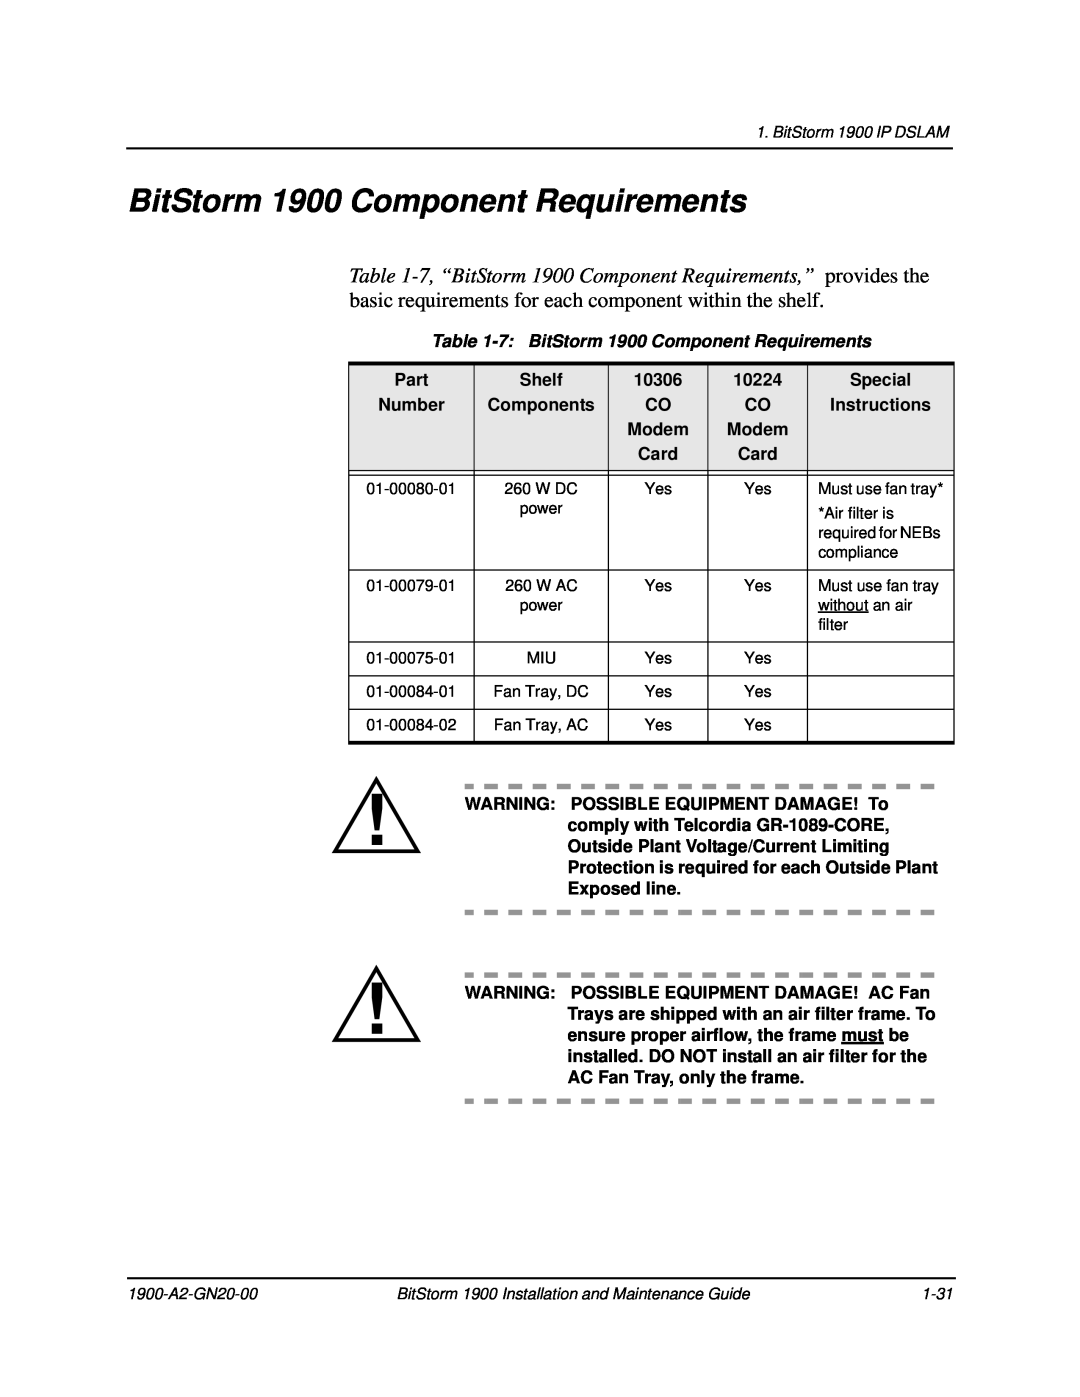 Paradyne manual 7 BitStorm 1900 Component Requirements 